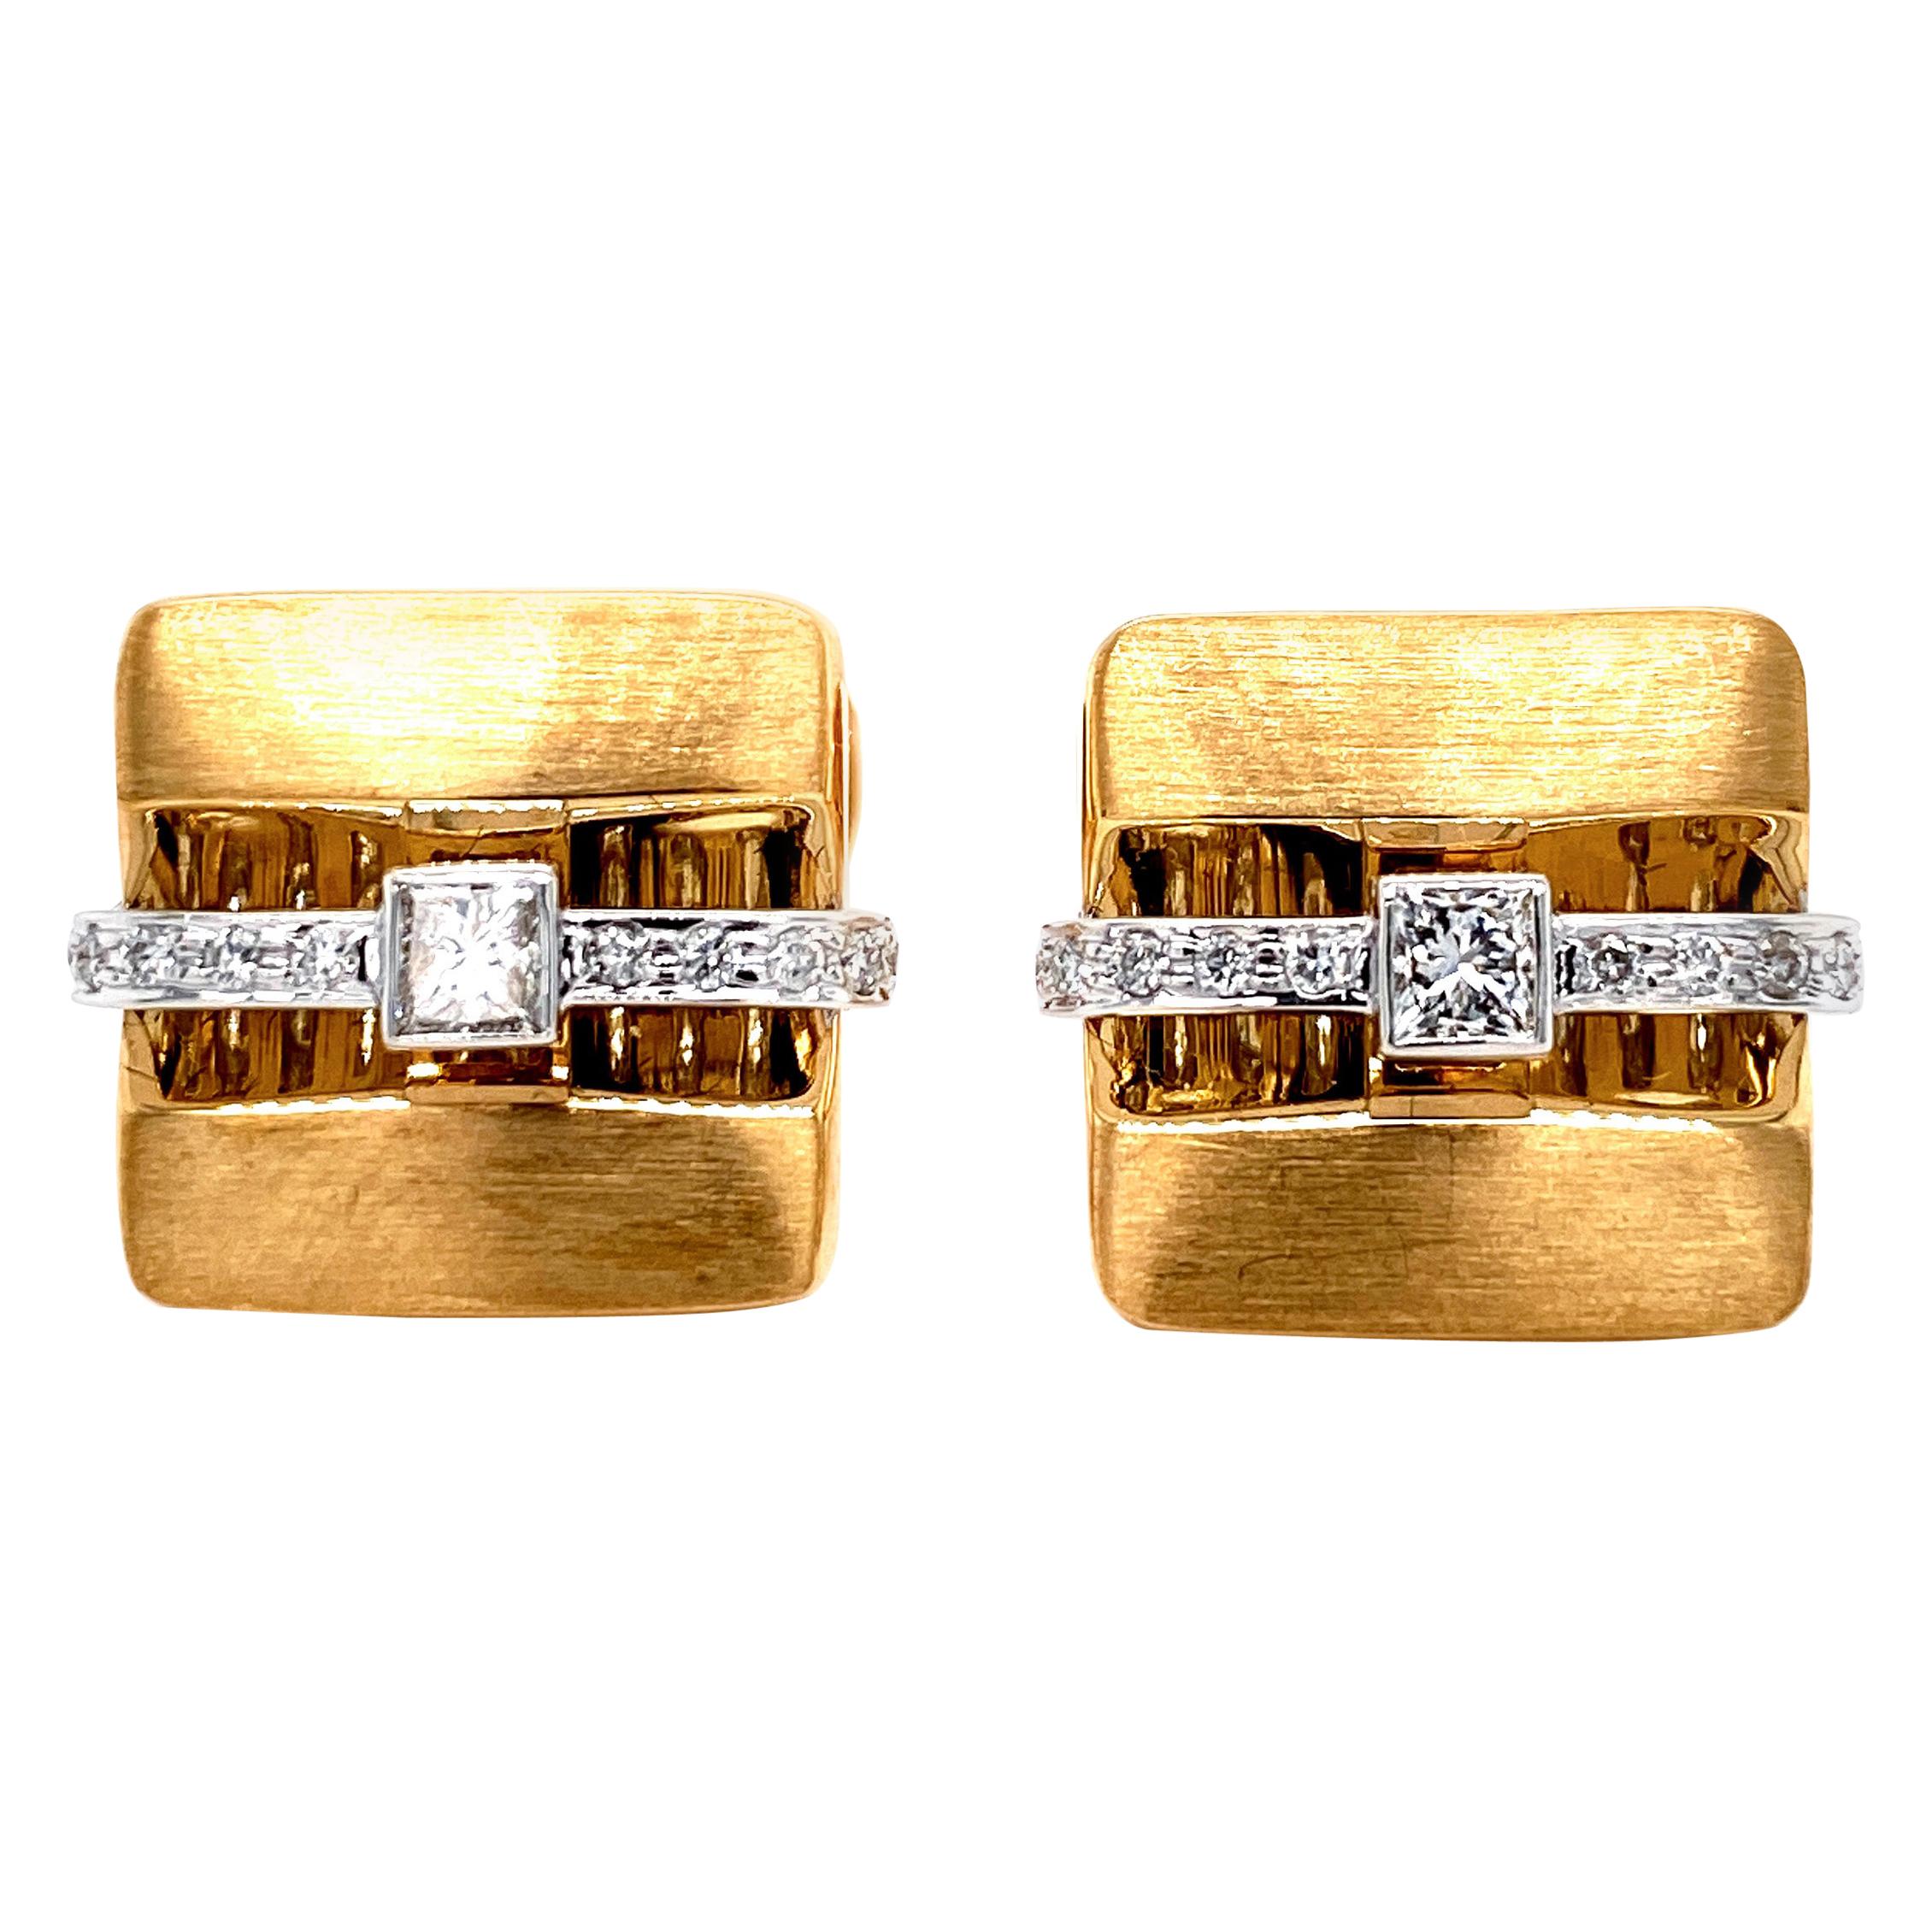 Classic Square Cut Diamond Cufflinks by Dilys’ in 18 Karat Yellow Gold